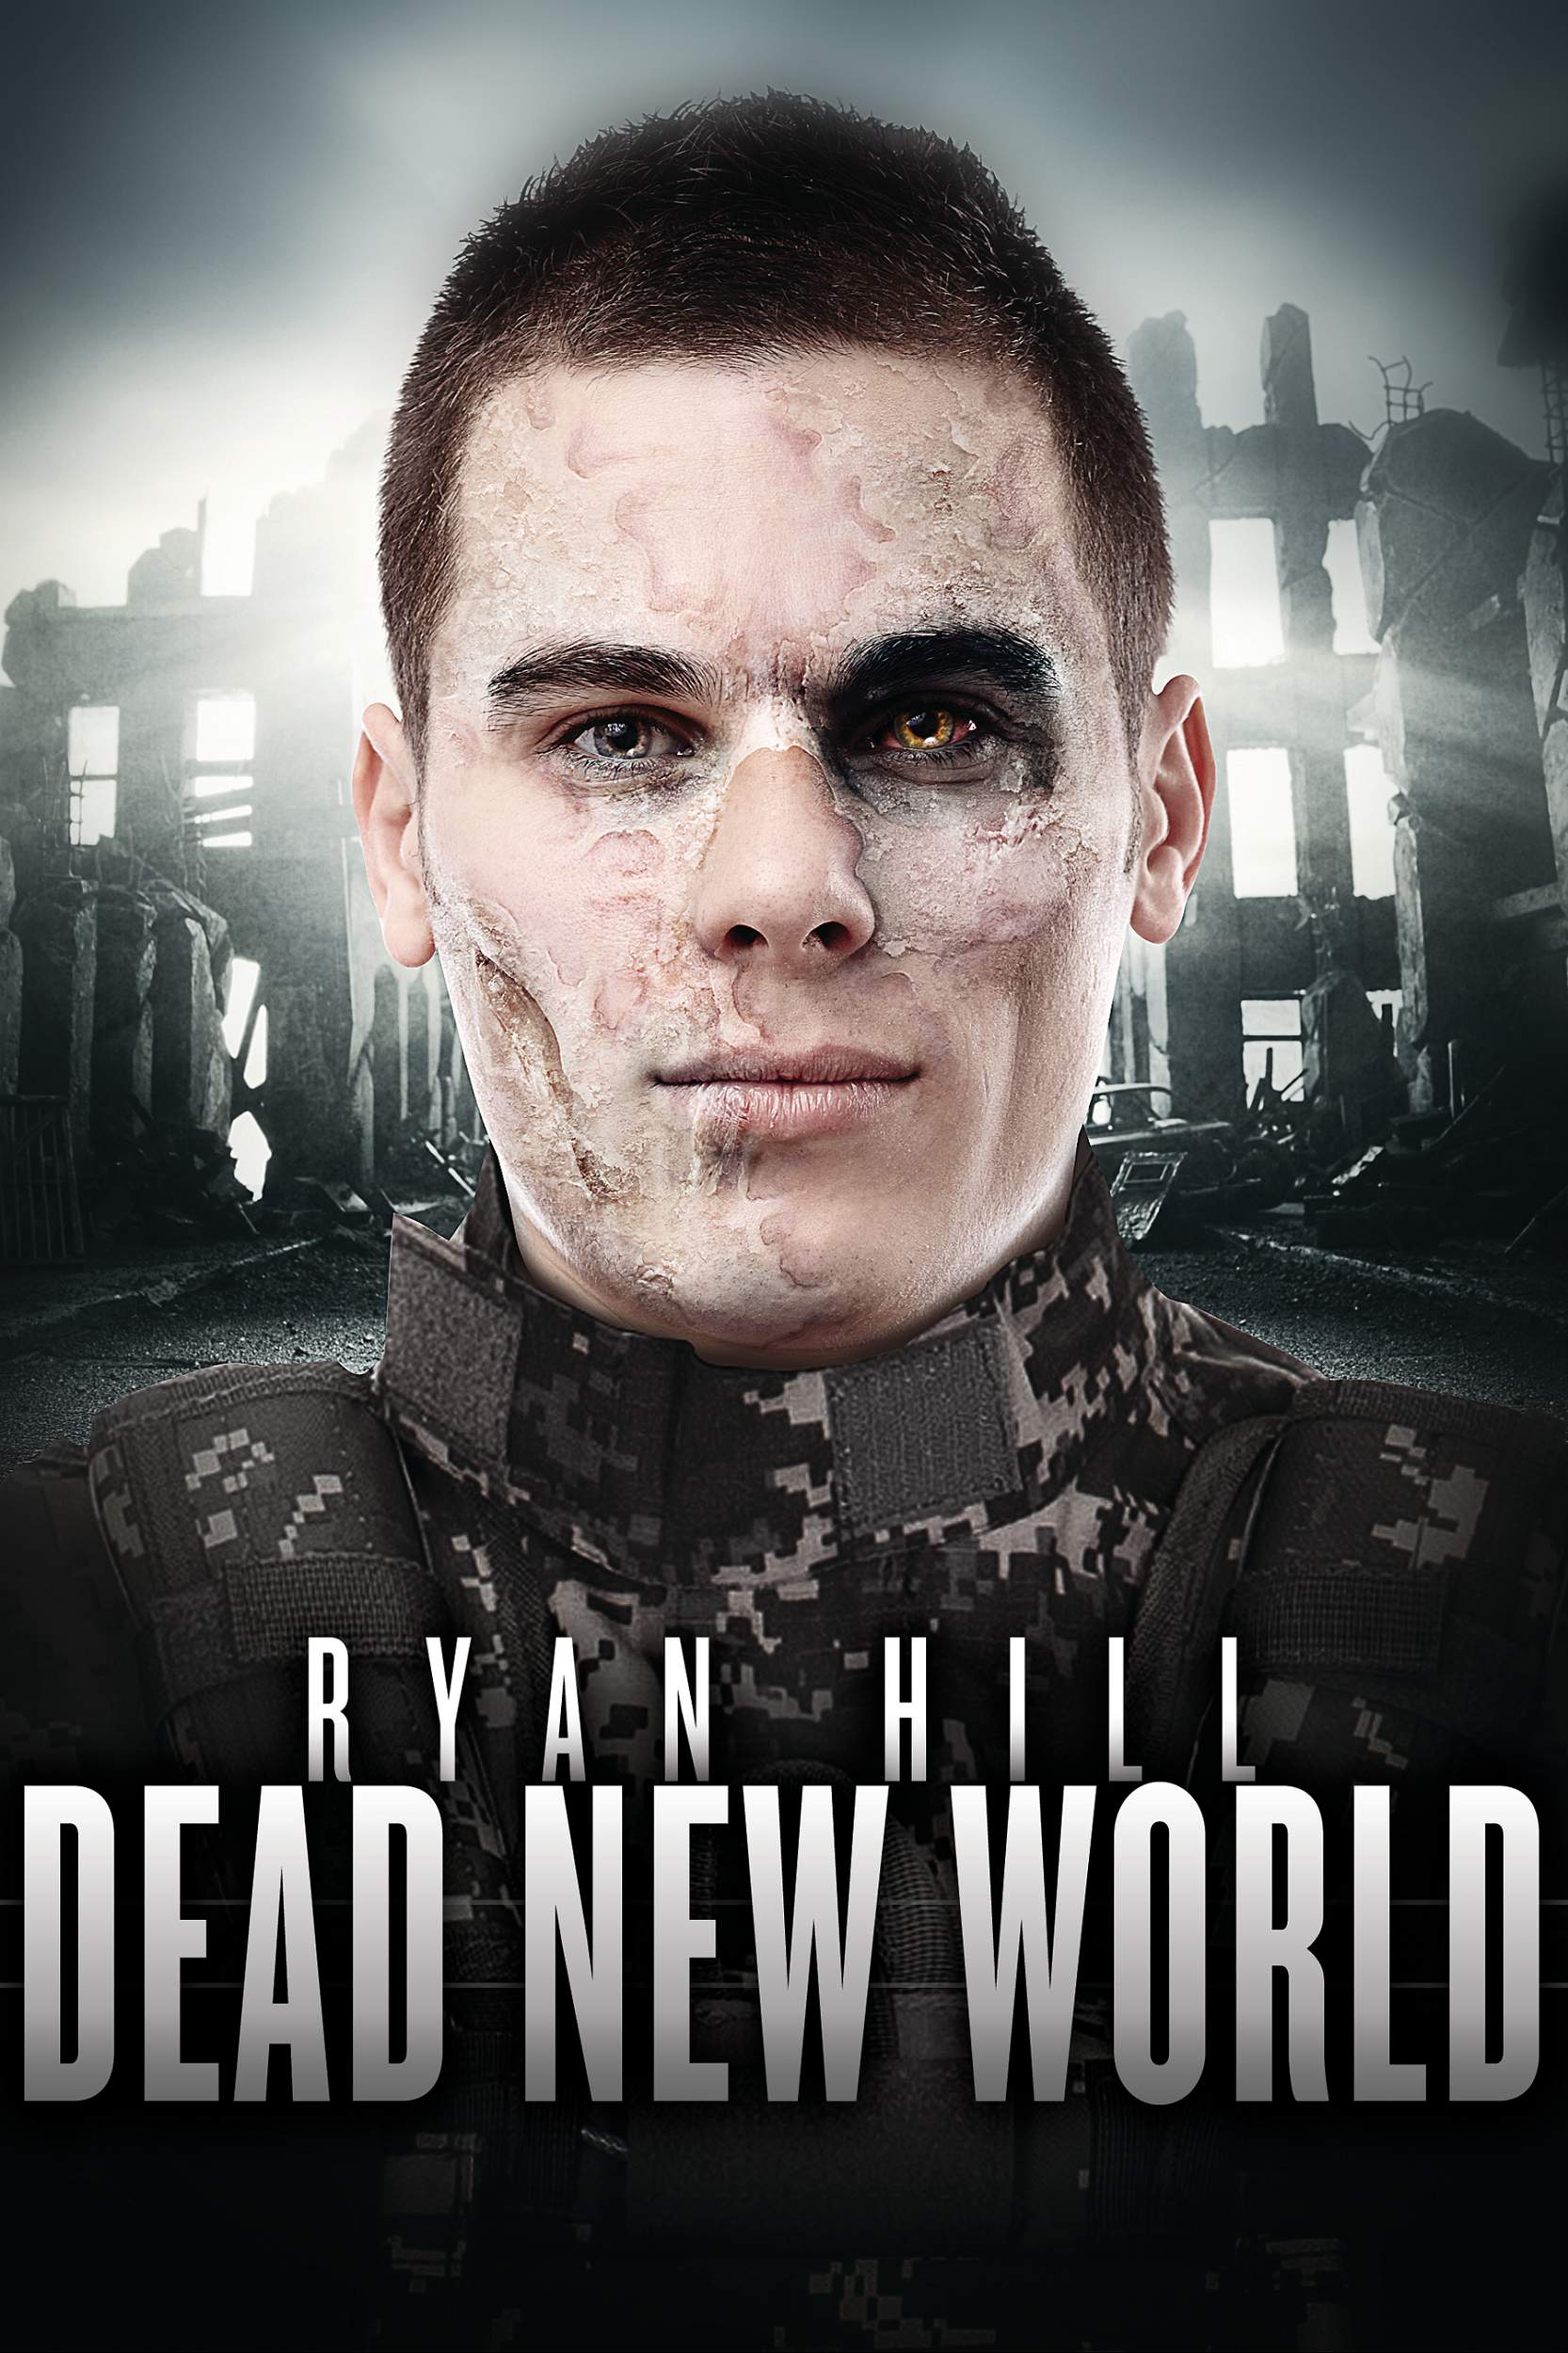 Dead new World